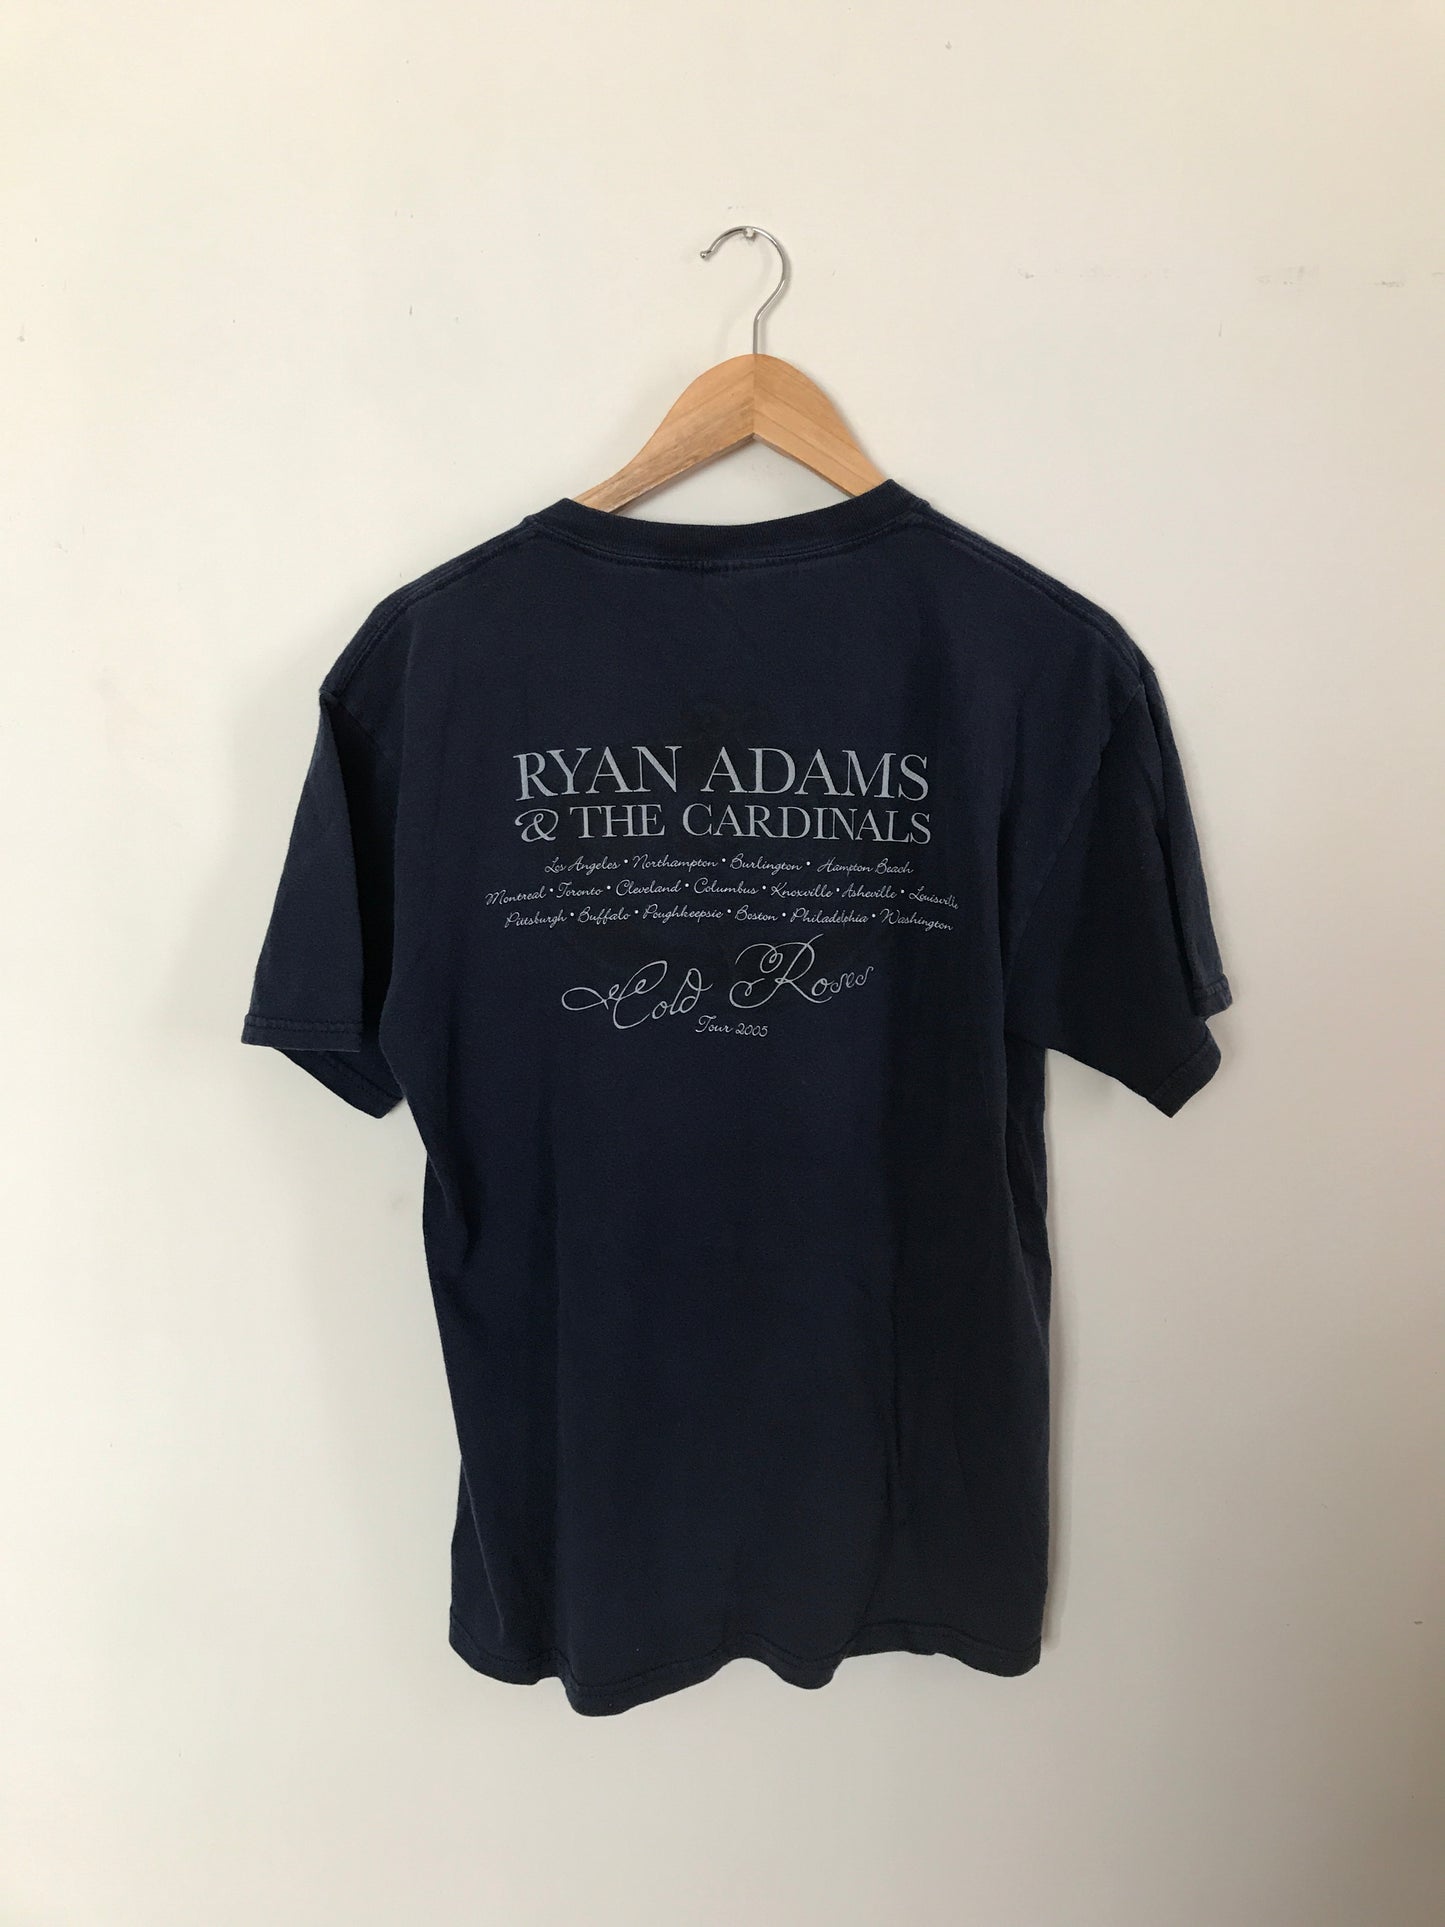 Ryan Adams 2005 T-shirt